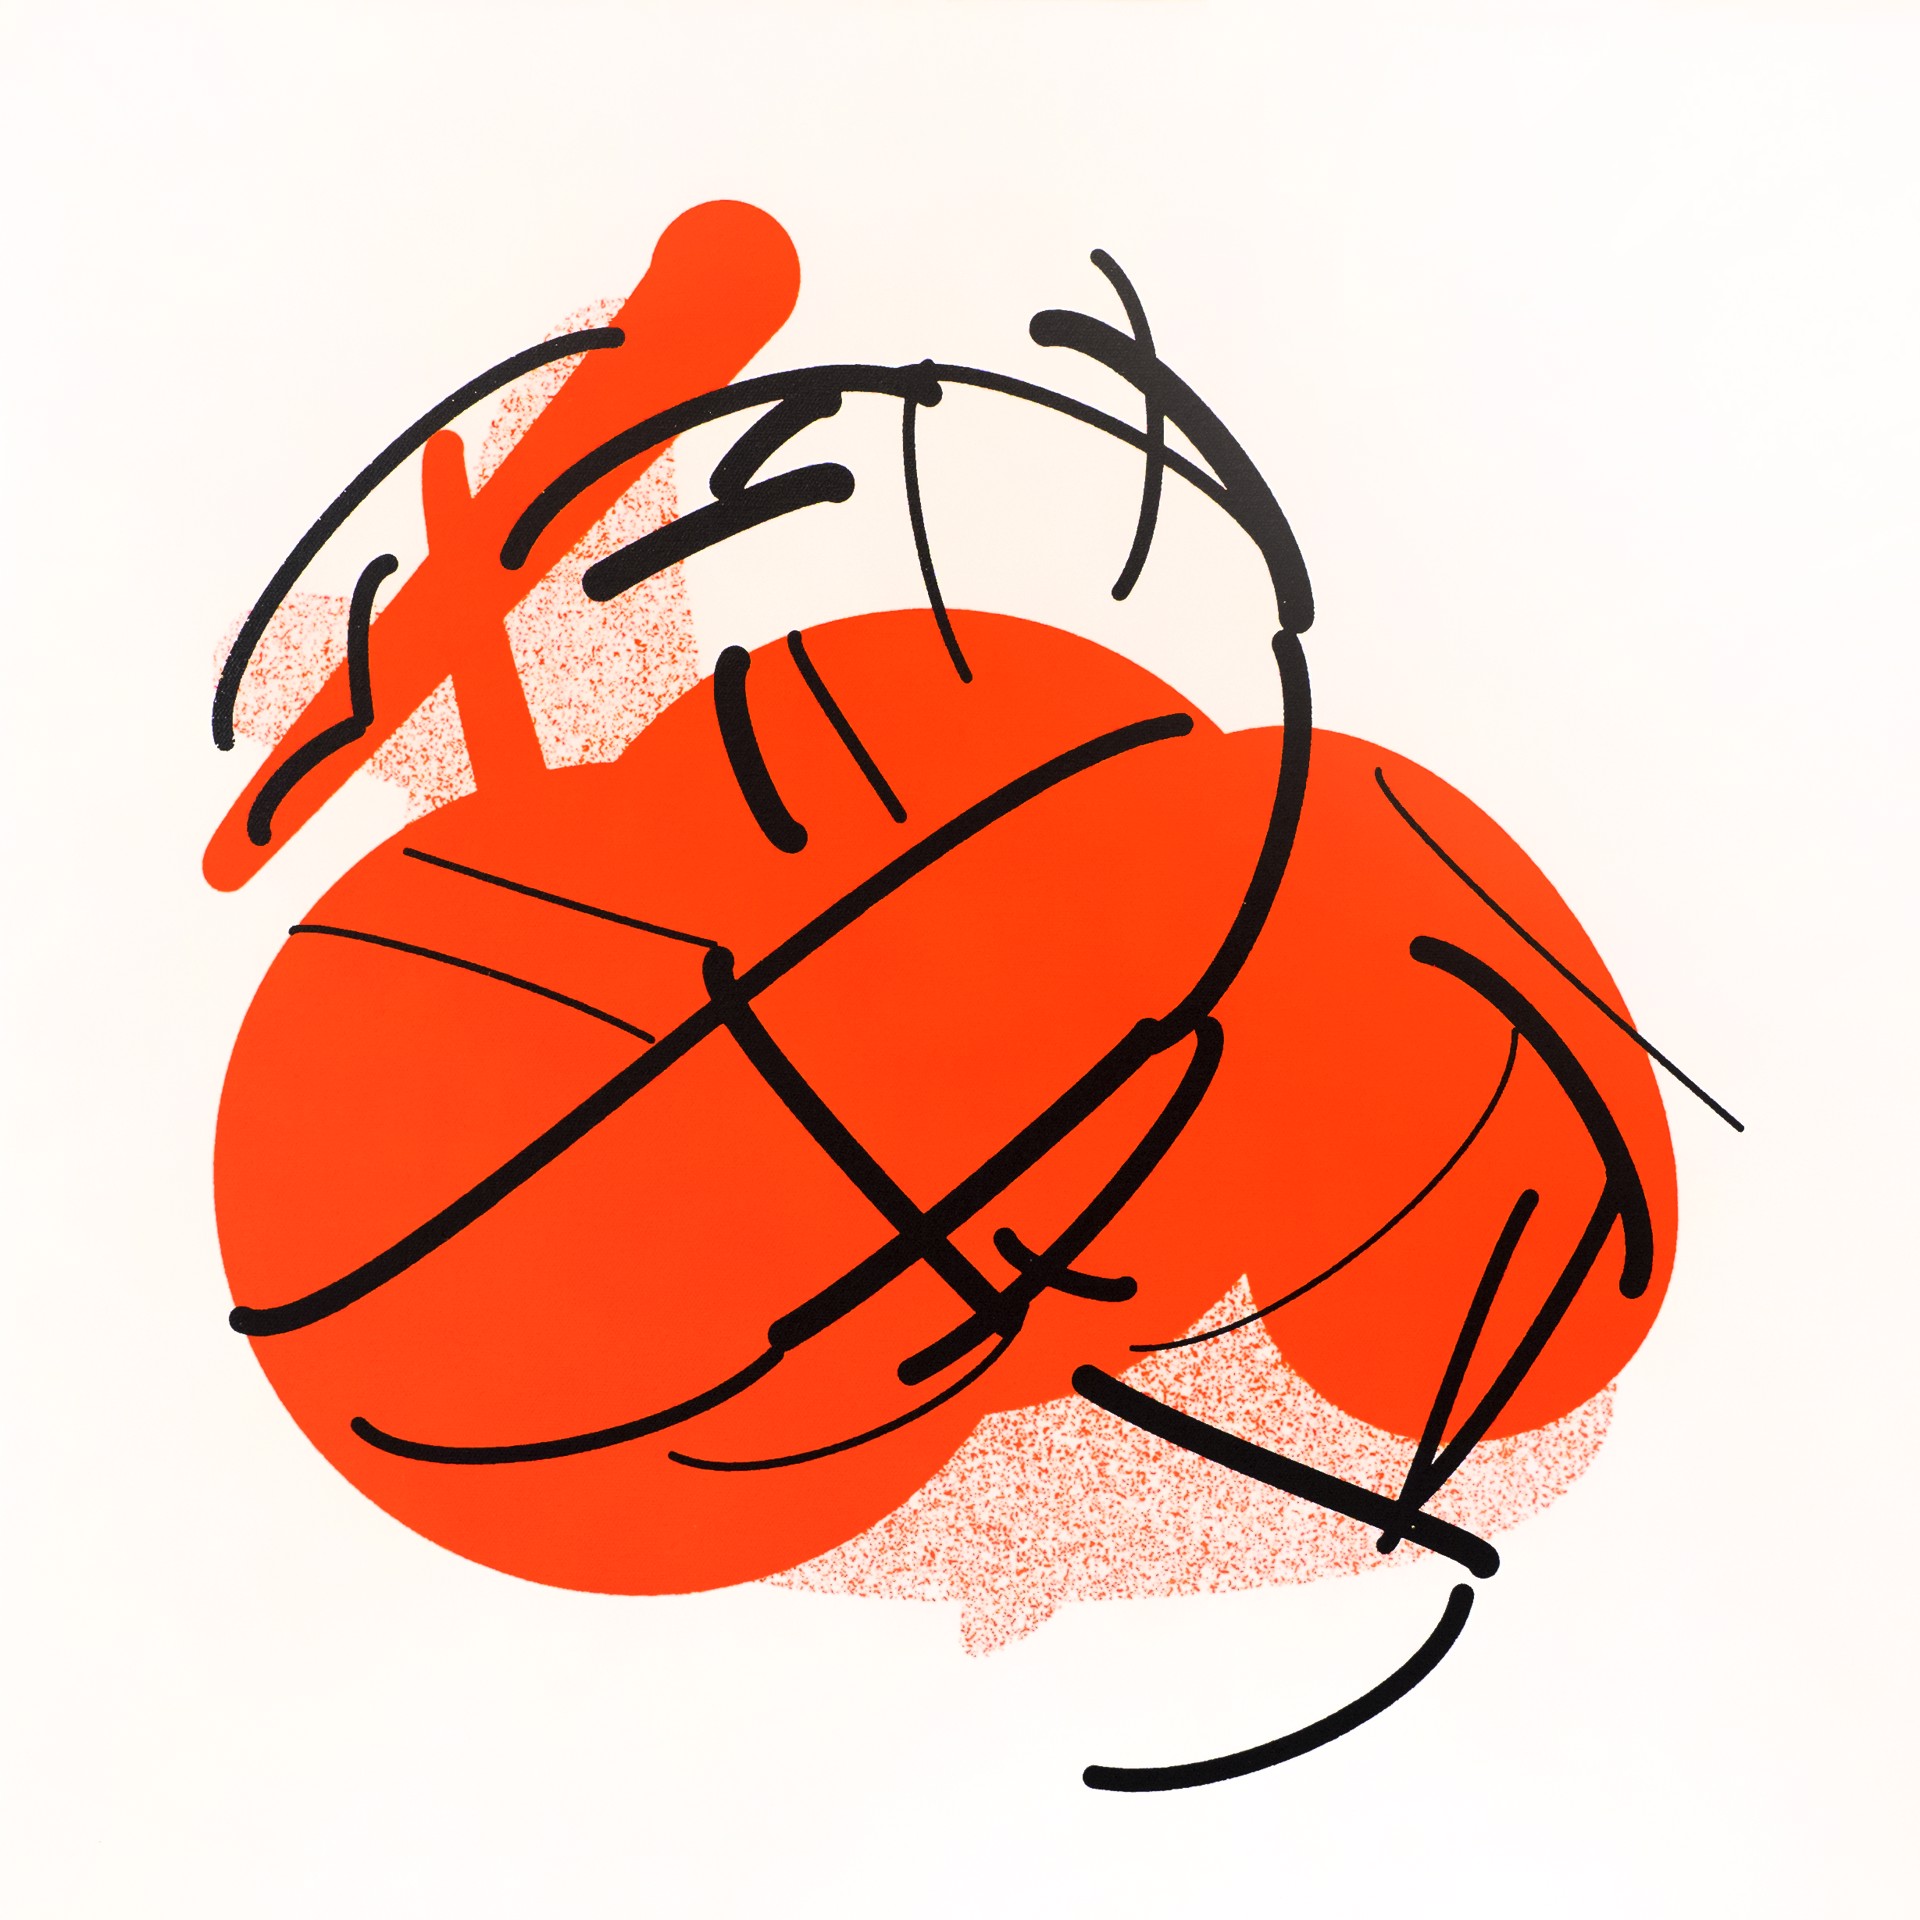 Basketball by Tom White